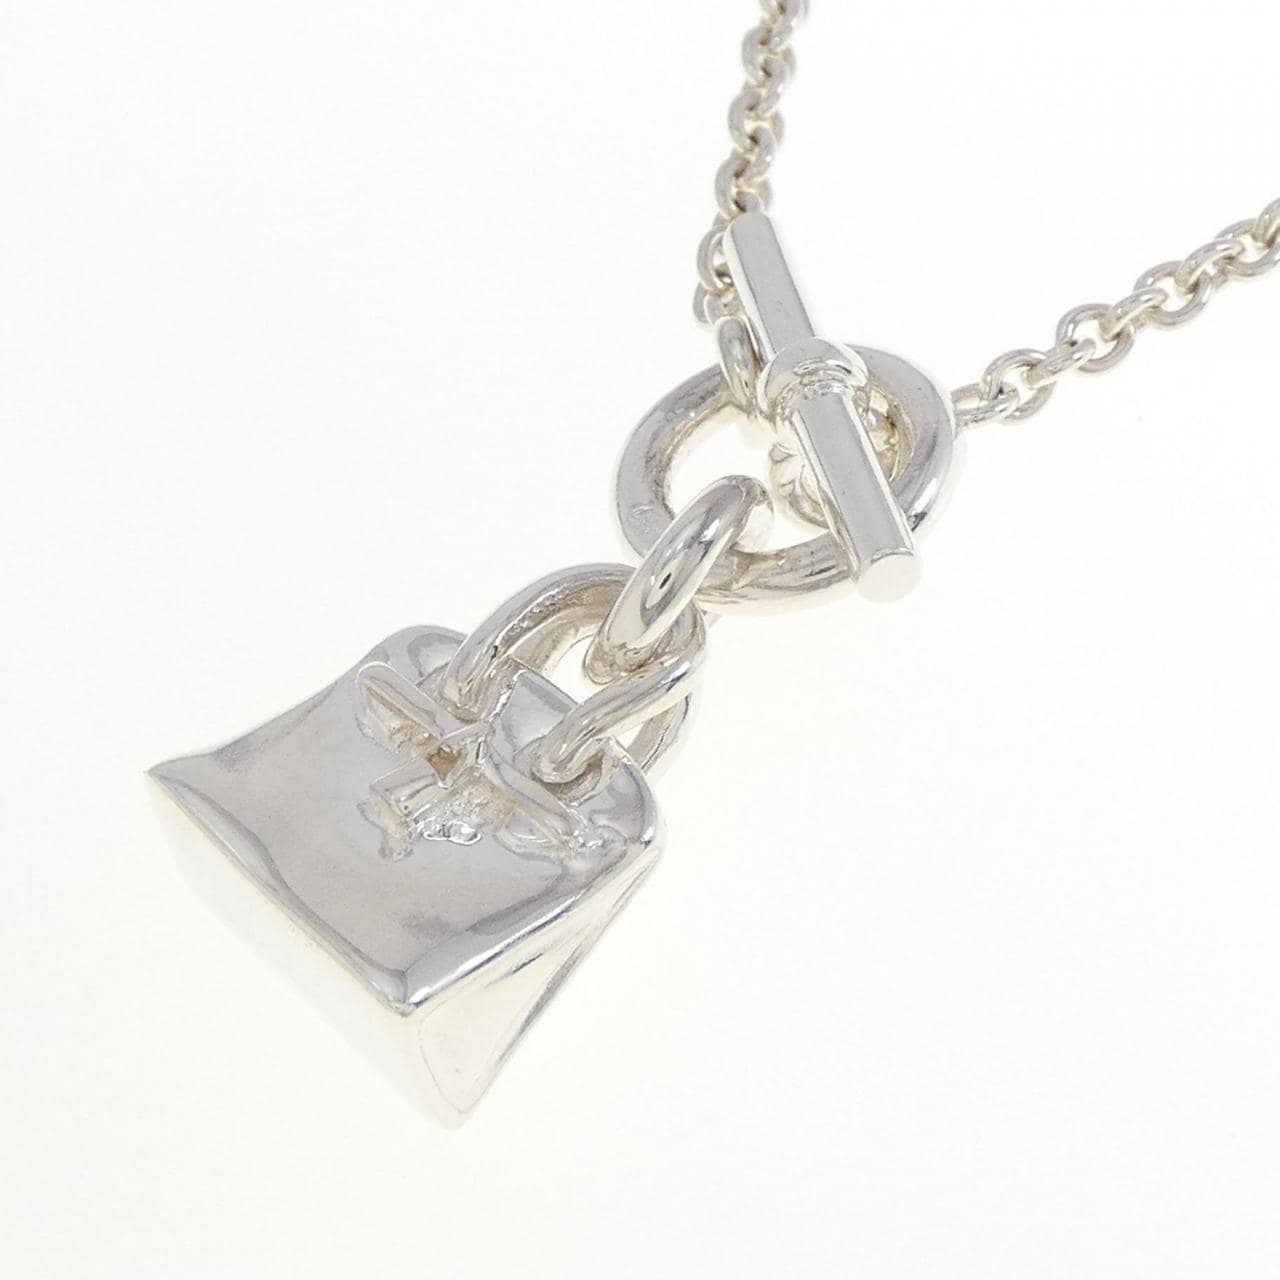 HERMES amulettes Birkin necklace